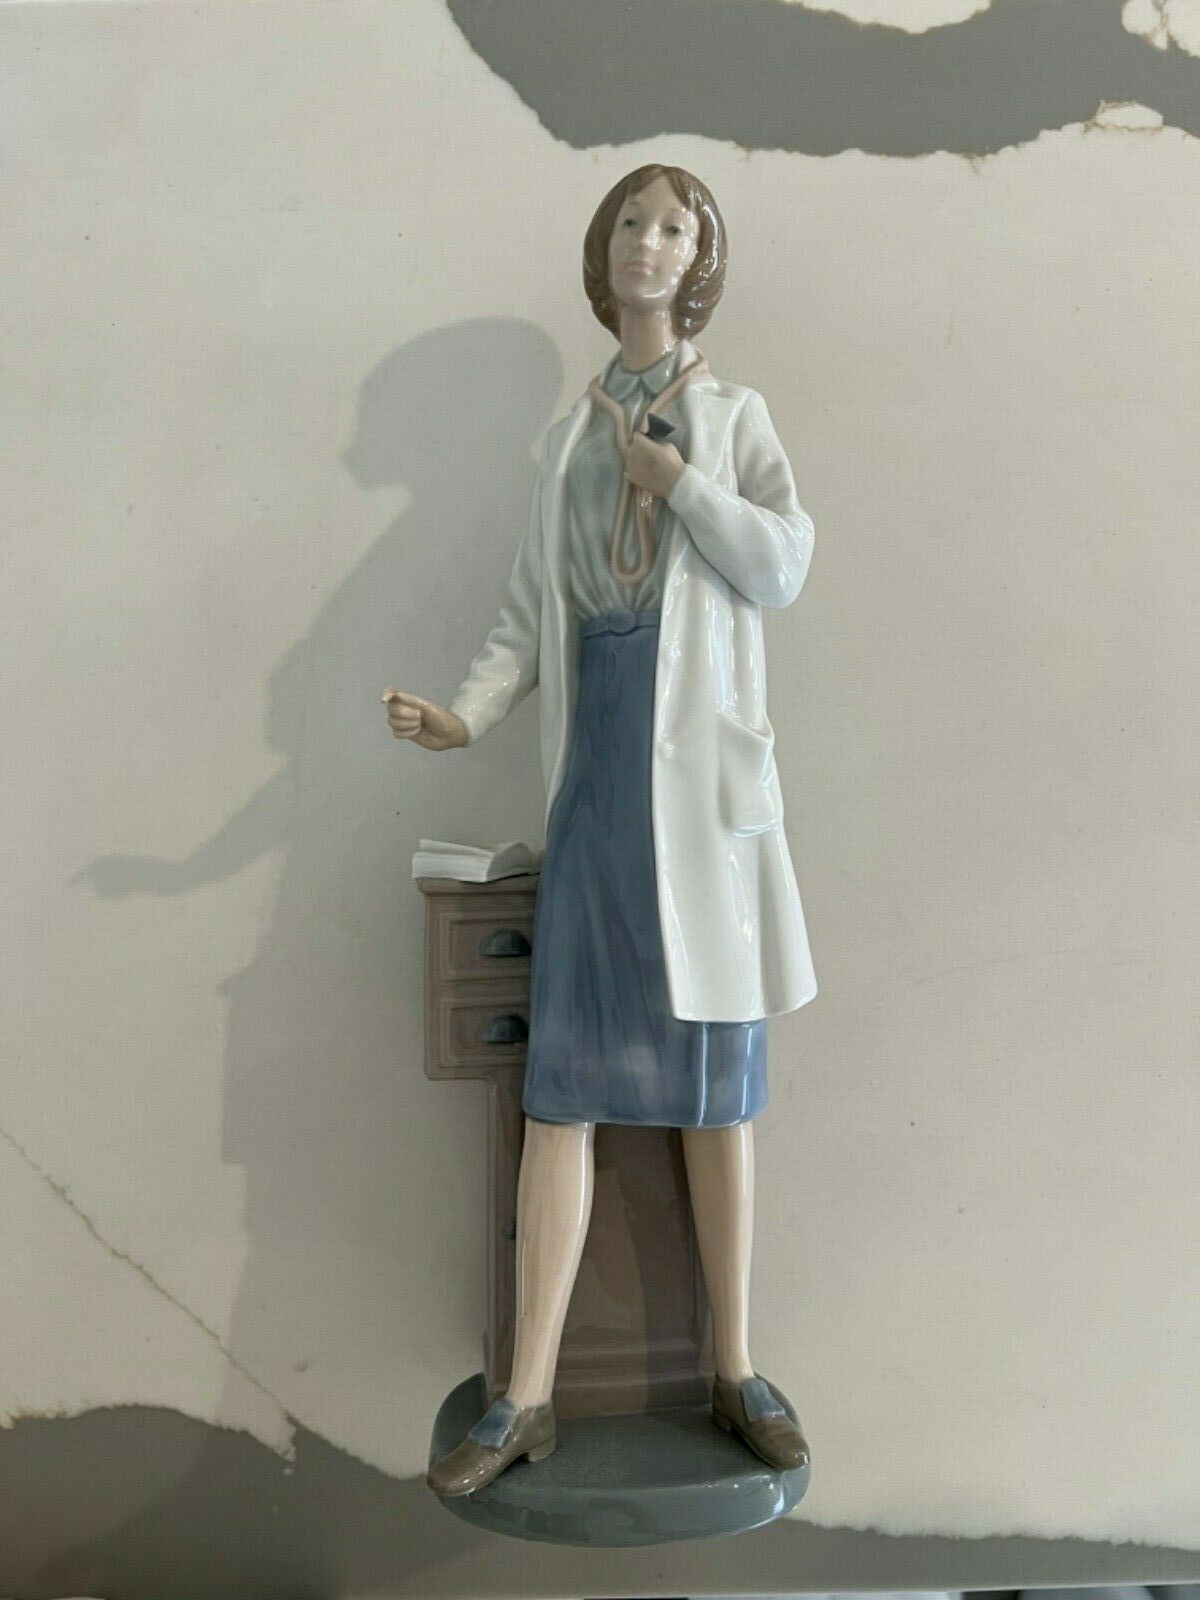 Nao Lladro Female Doctor Figurine (vintage)